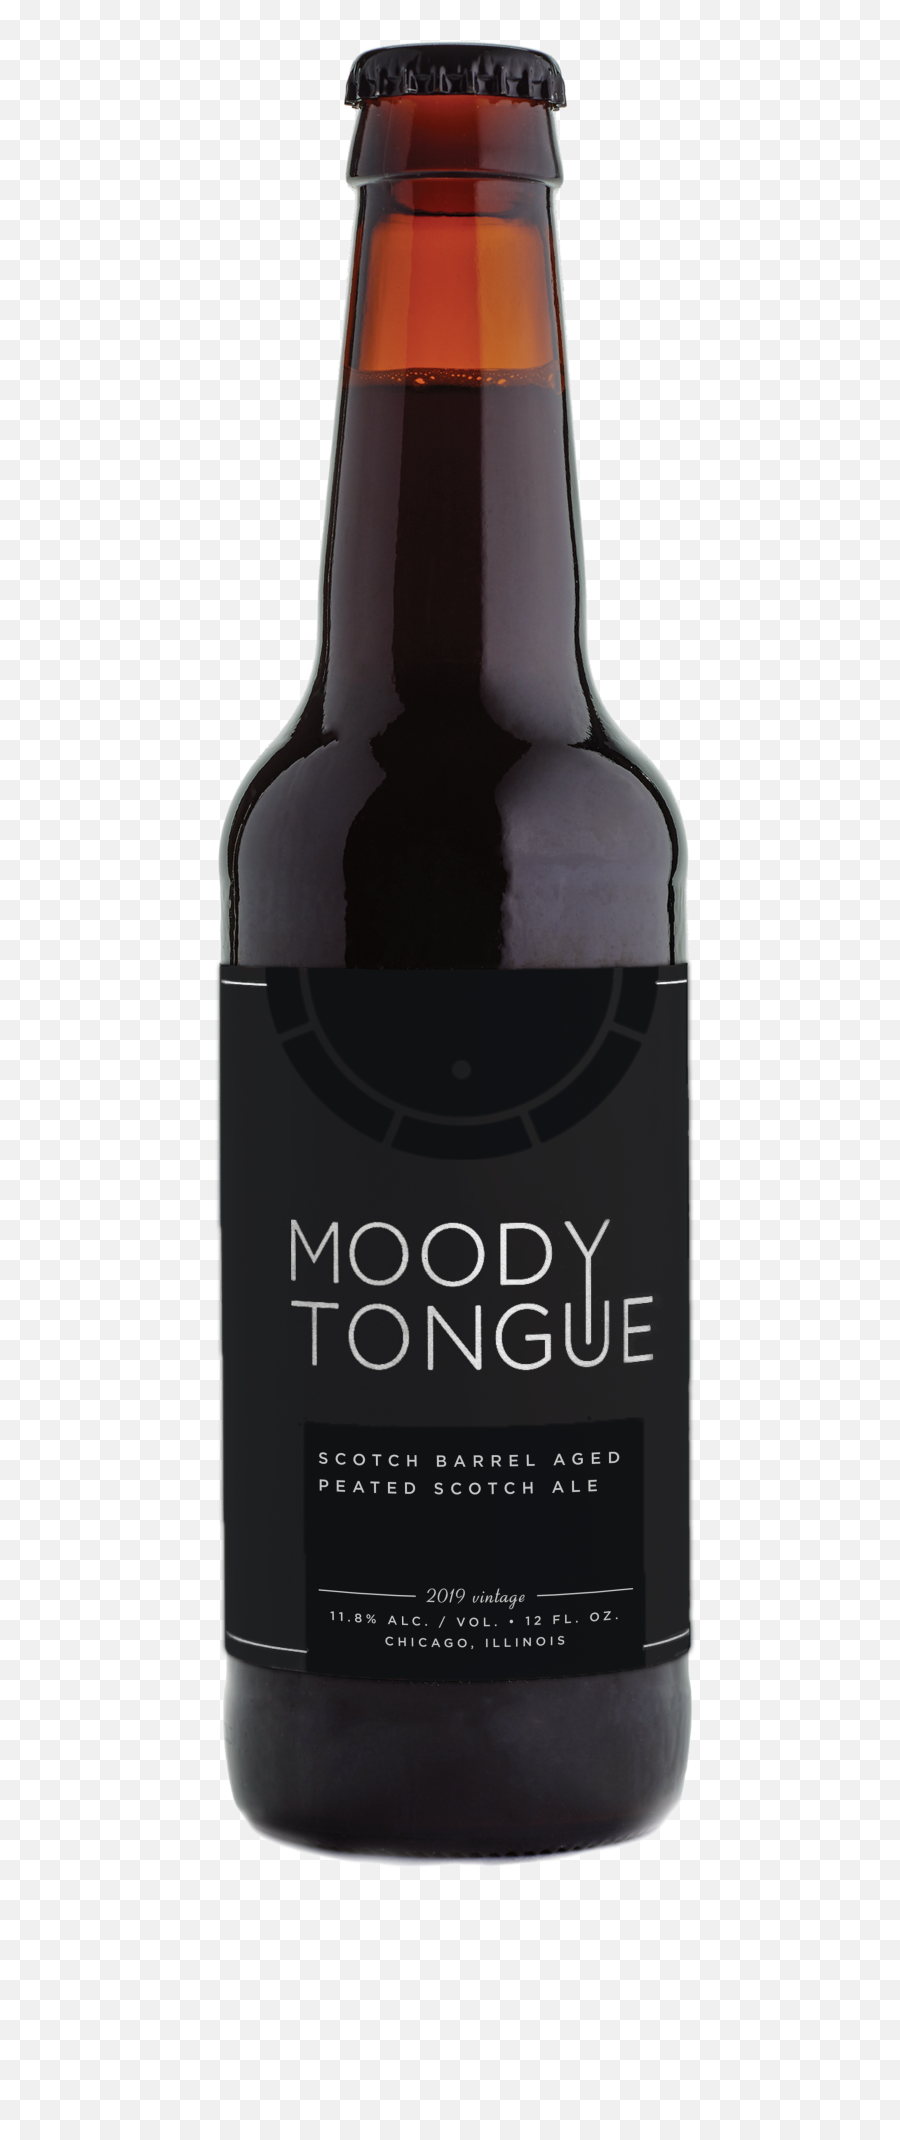 Scotch Barrel Aged Peated Ale Moody Tongue - Borg Brugghús Png,Jack Daniels Bottle Png